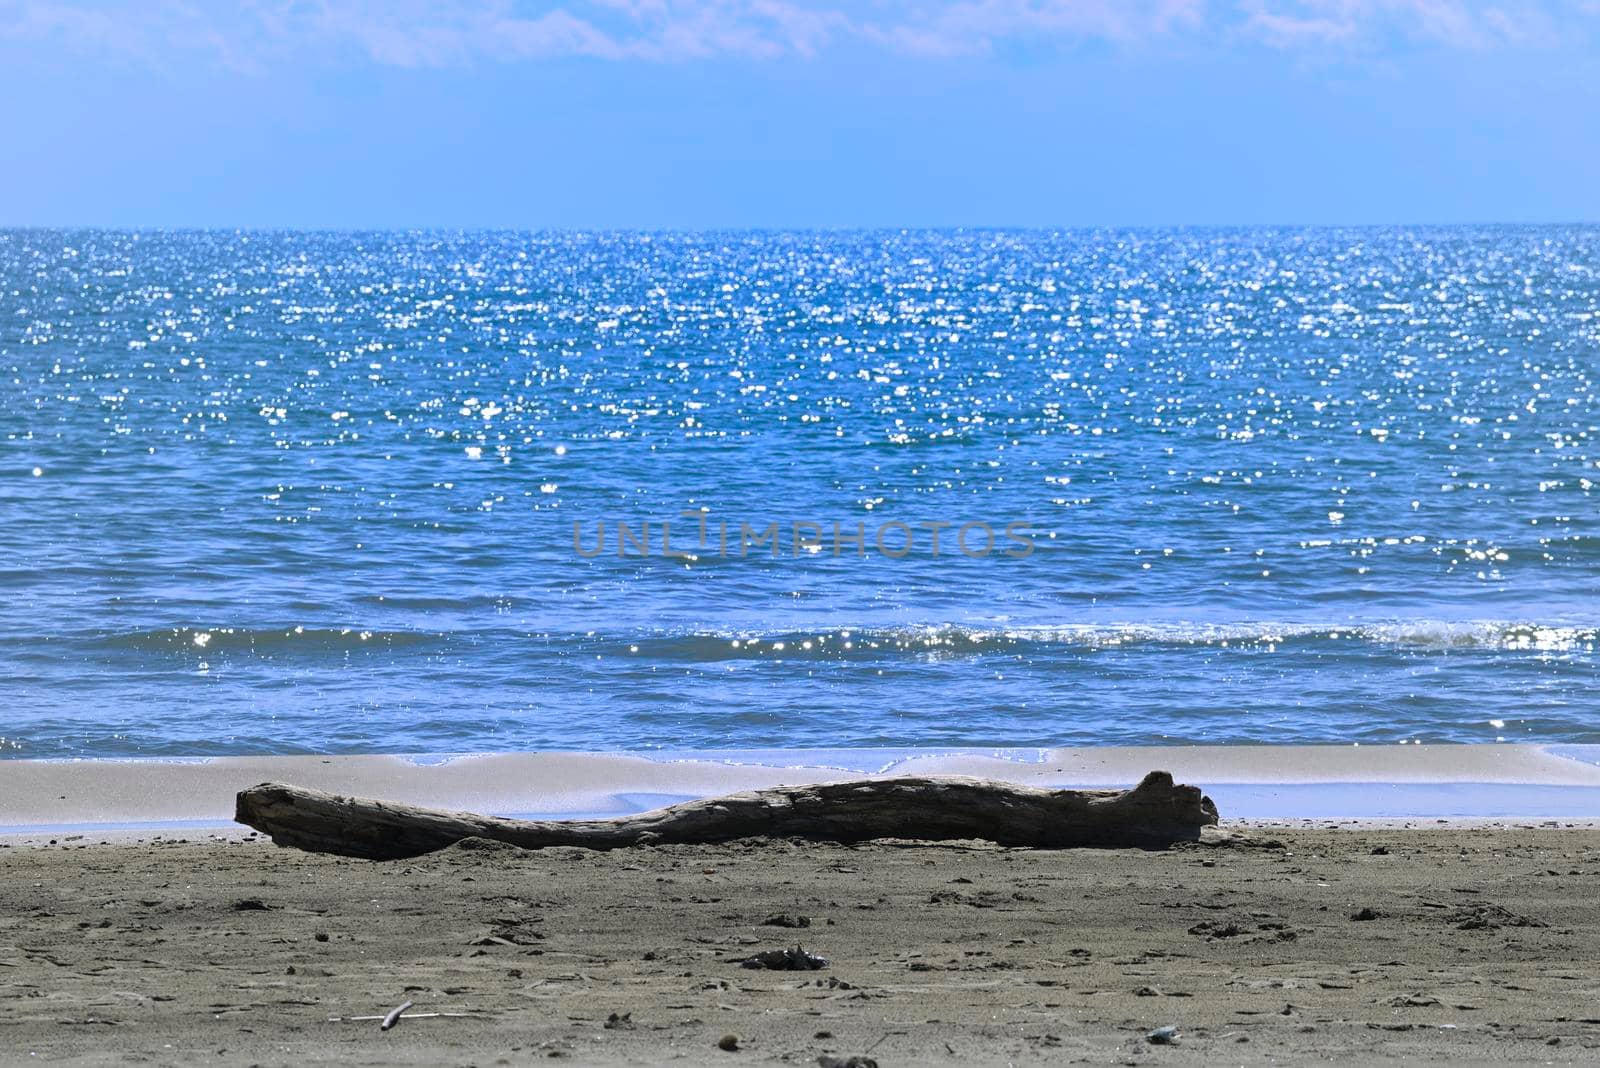 Mediterranean beach detail with sand, shells, driftwood u by AlessandroZocc